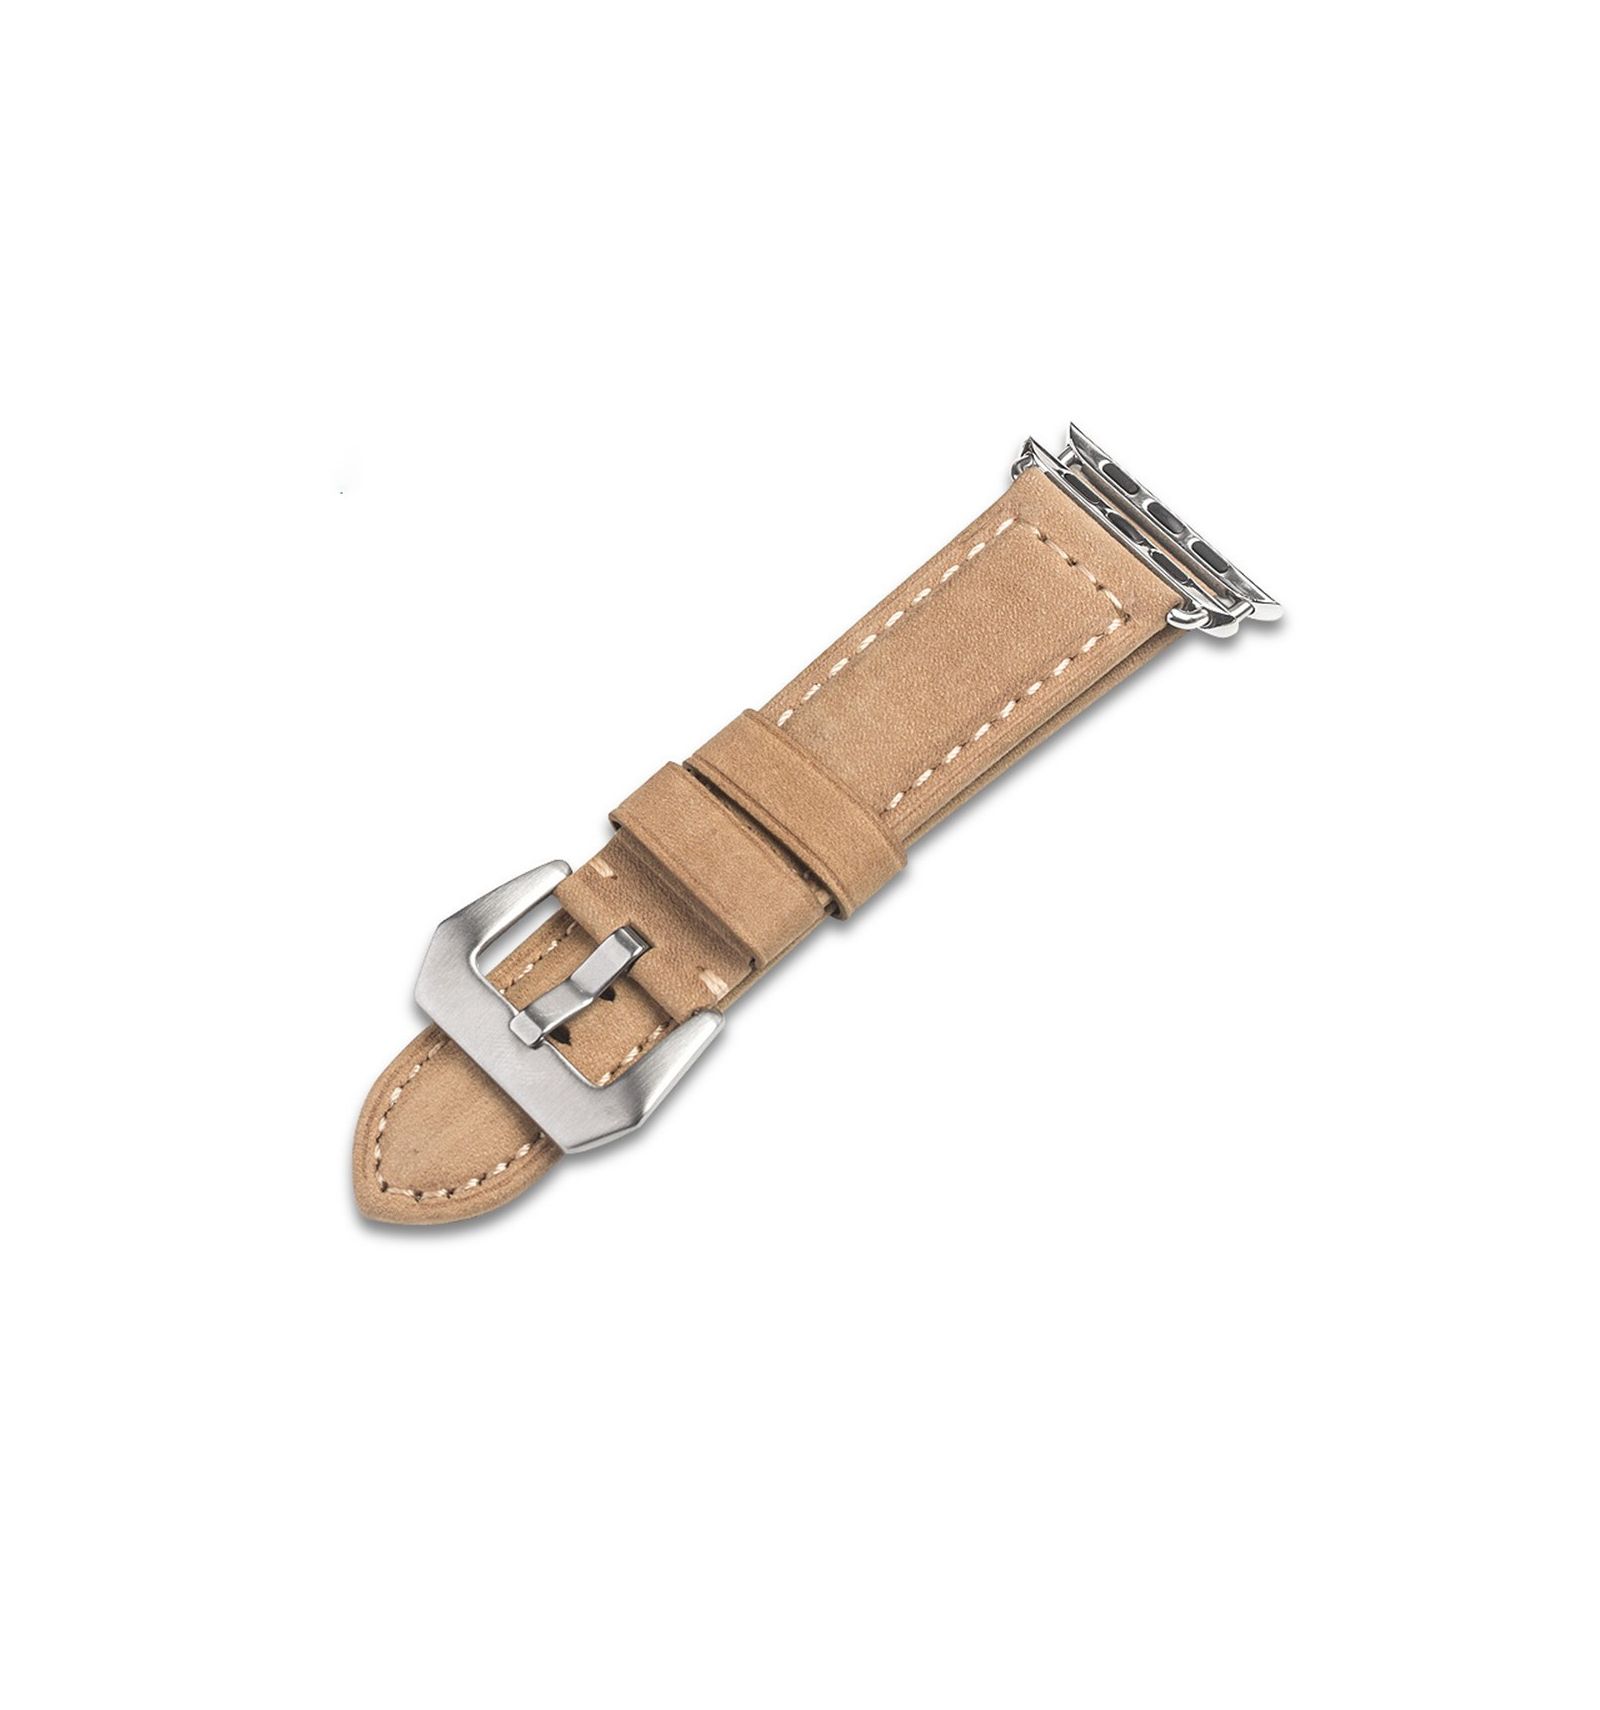 Bracelet Apple Watch 42mm - 44mm en cuir véritable - Marron clair